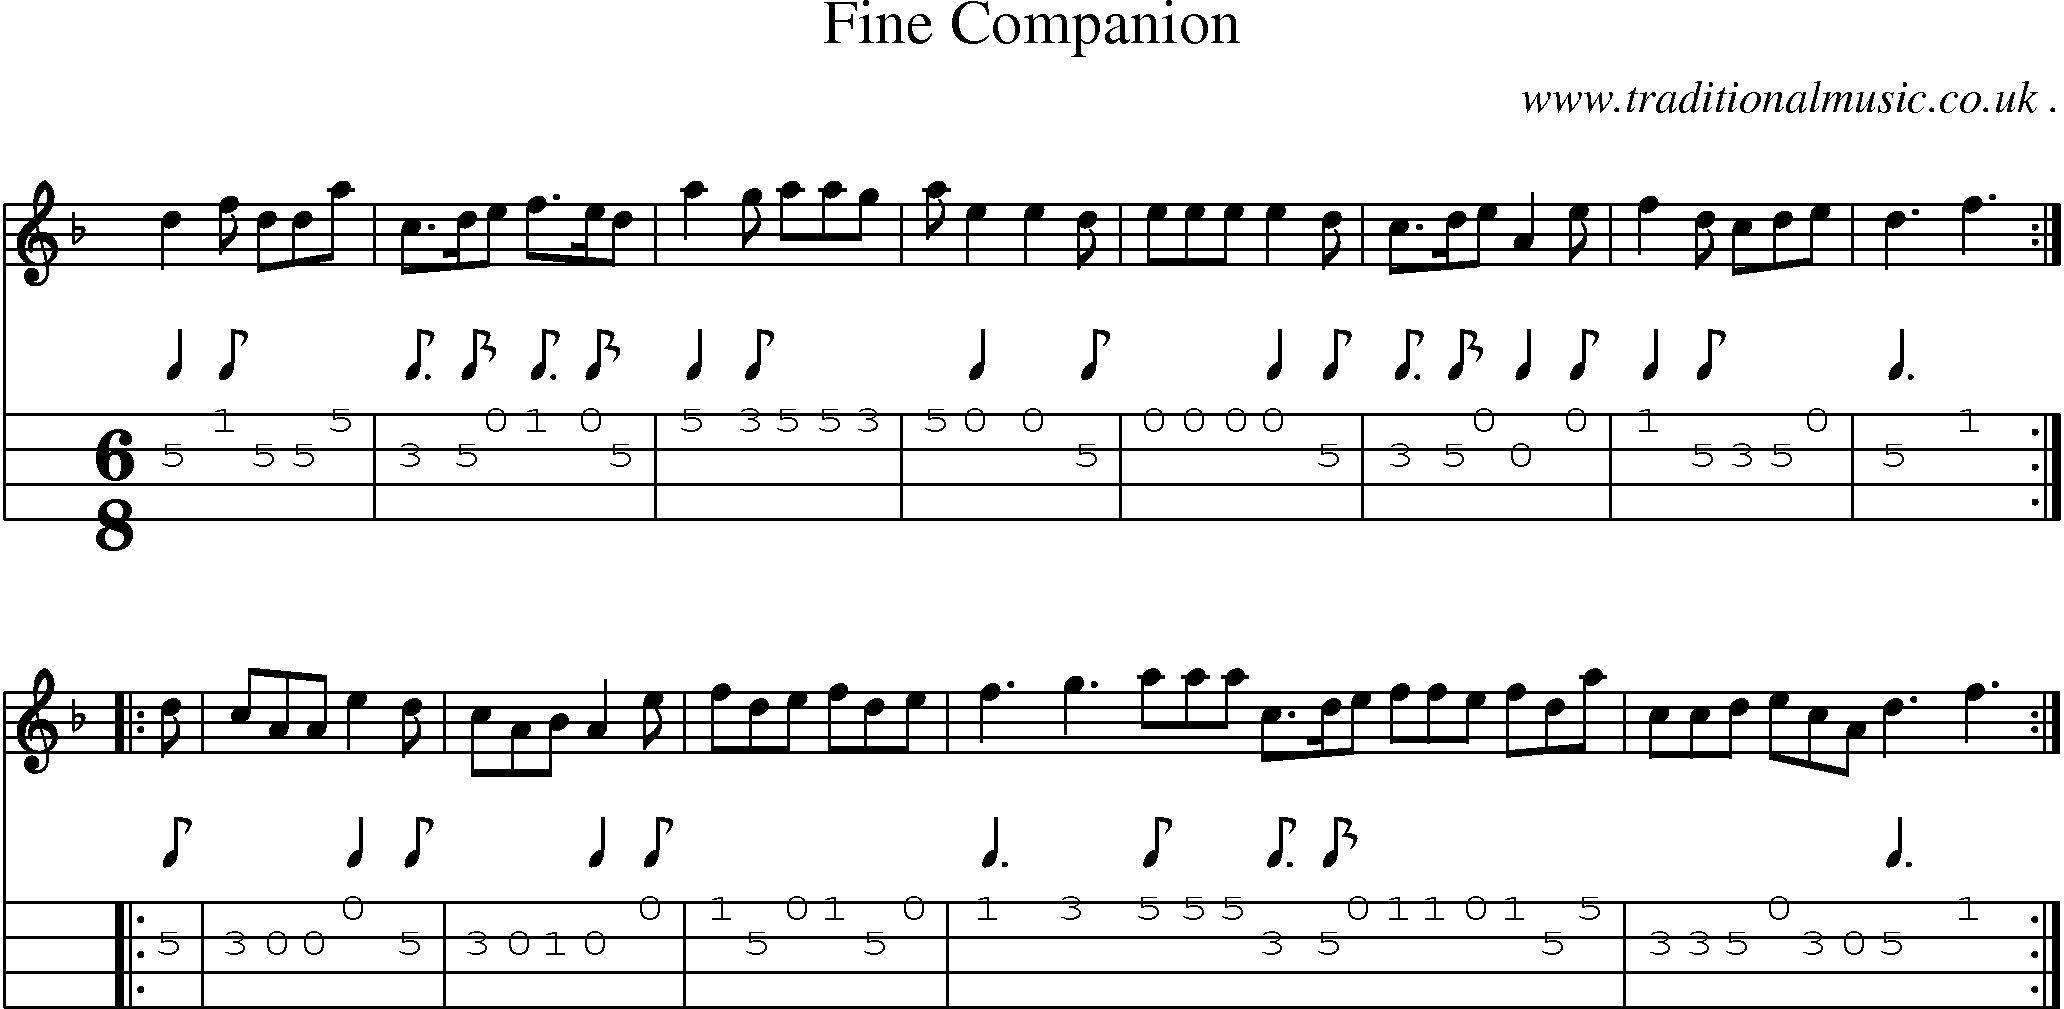 Sheet-Music and Mandolin Tabs for Fine Companion